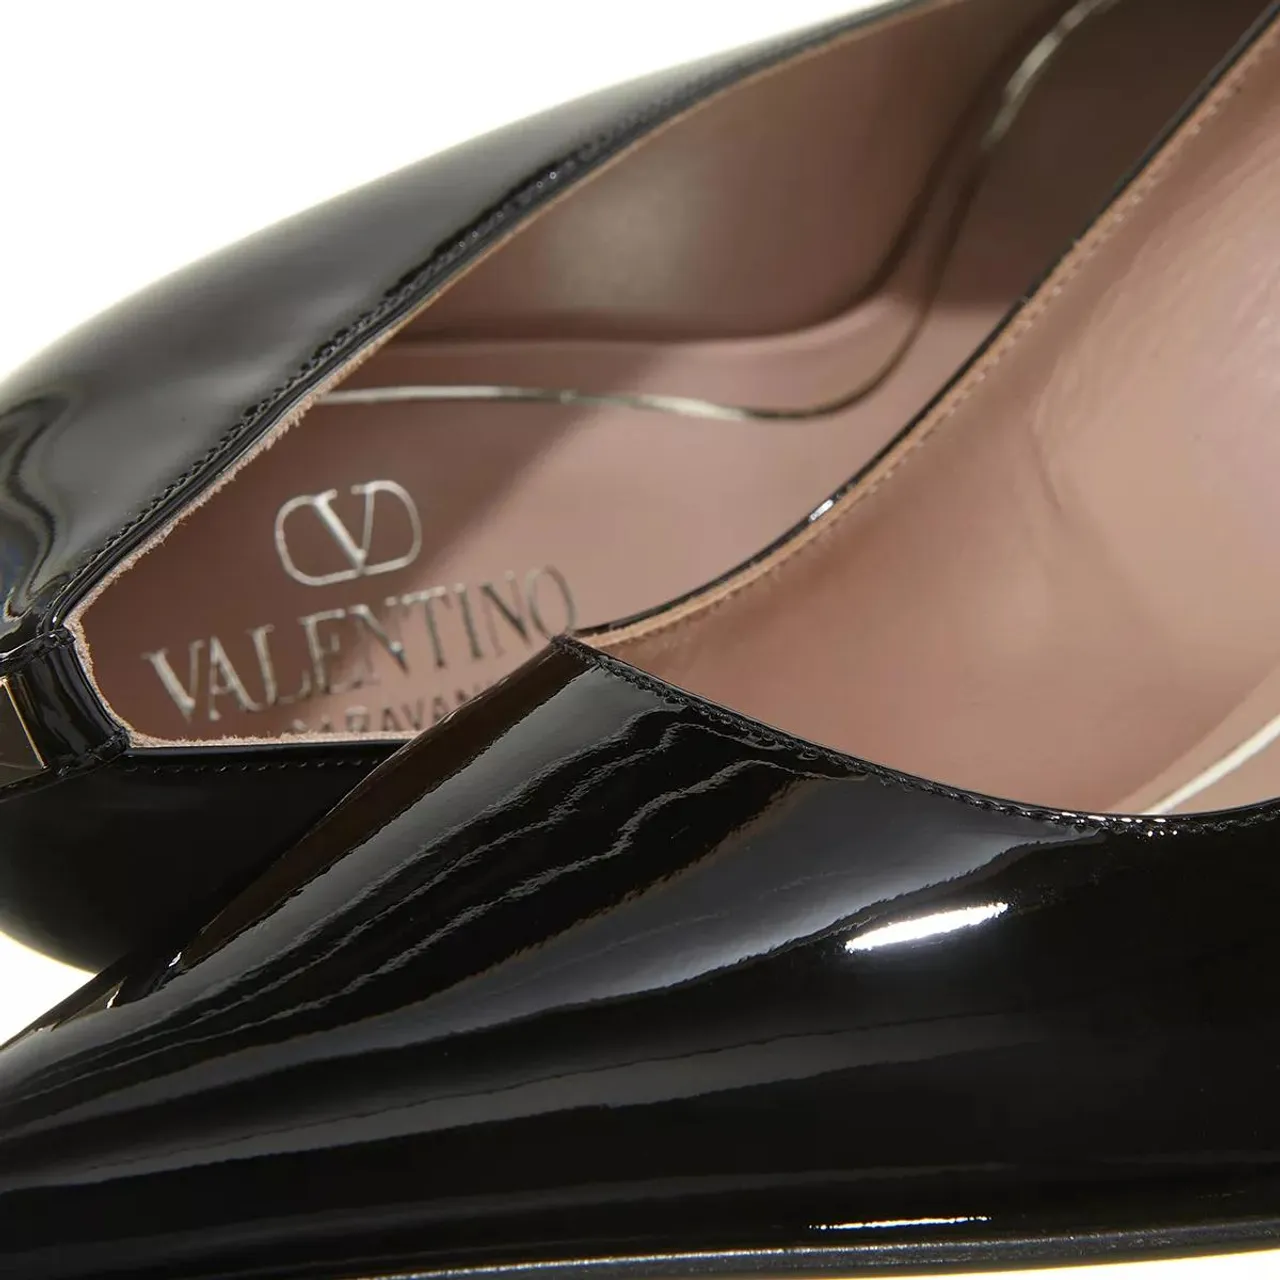 Valentino Garavani Pumps & High Heels - Pumps - black - Pumps & High Heels for ladies